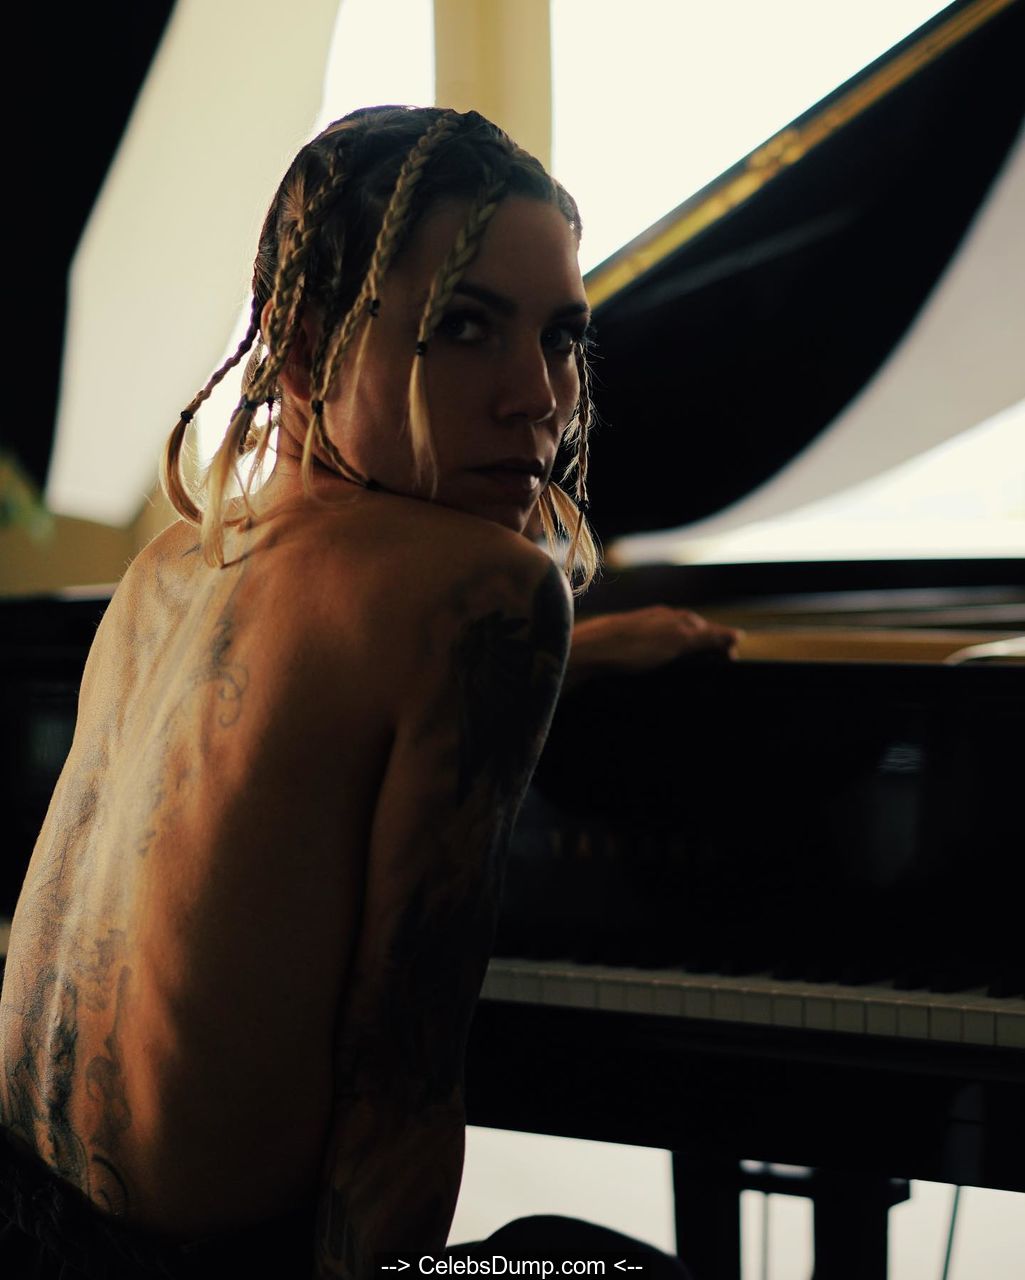 Skylar Grey naked piano shoot - May 09, 2020.